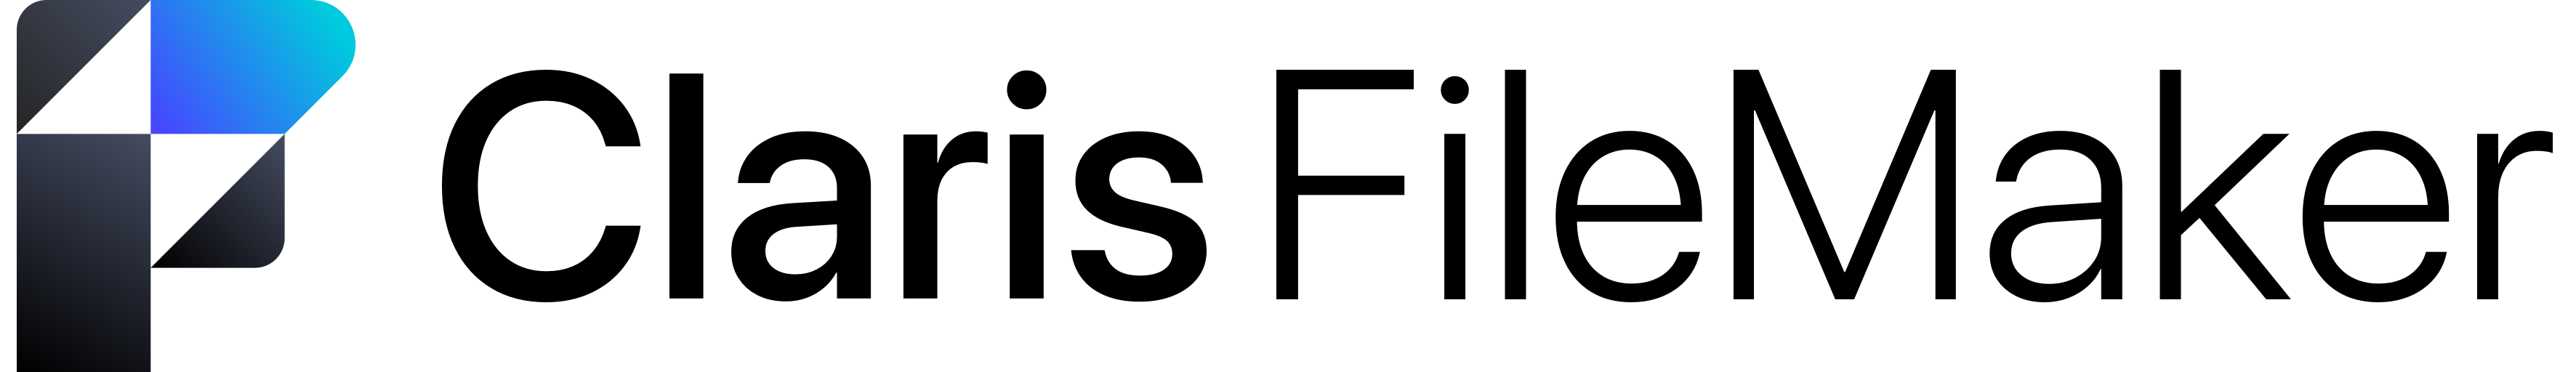 FileMaker Platform logo